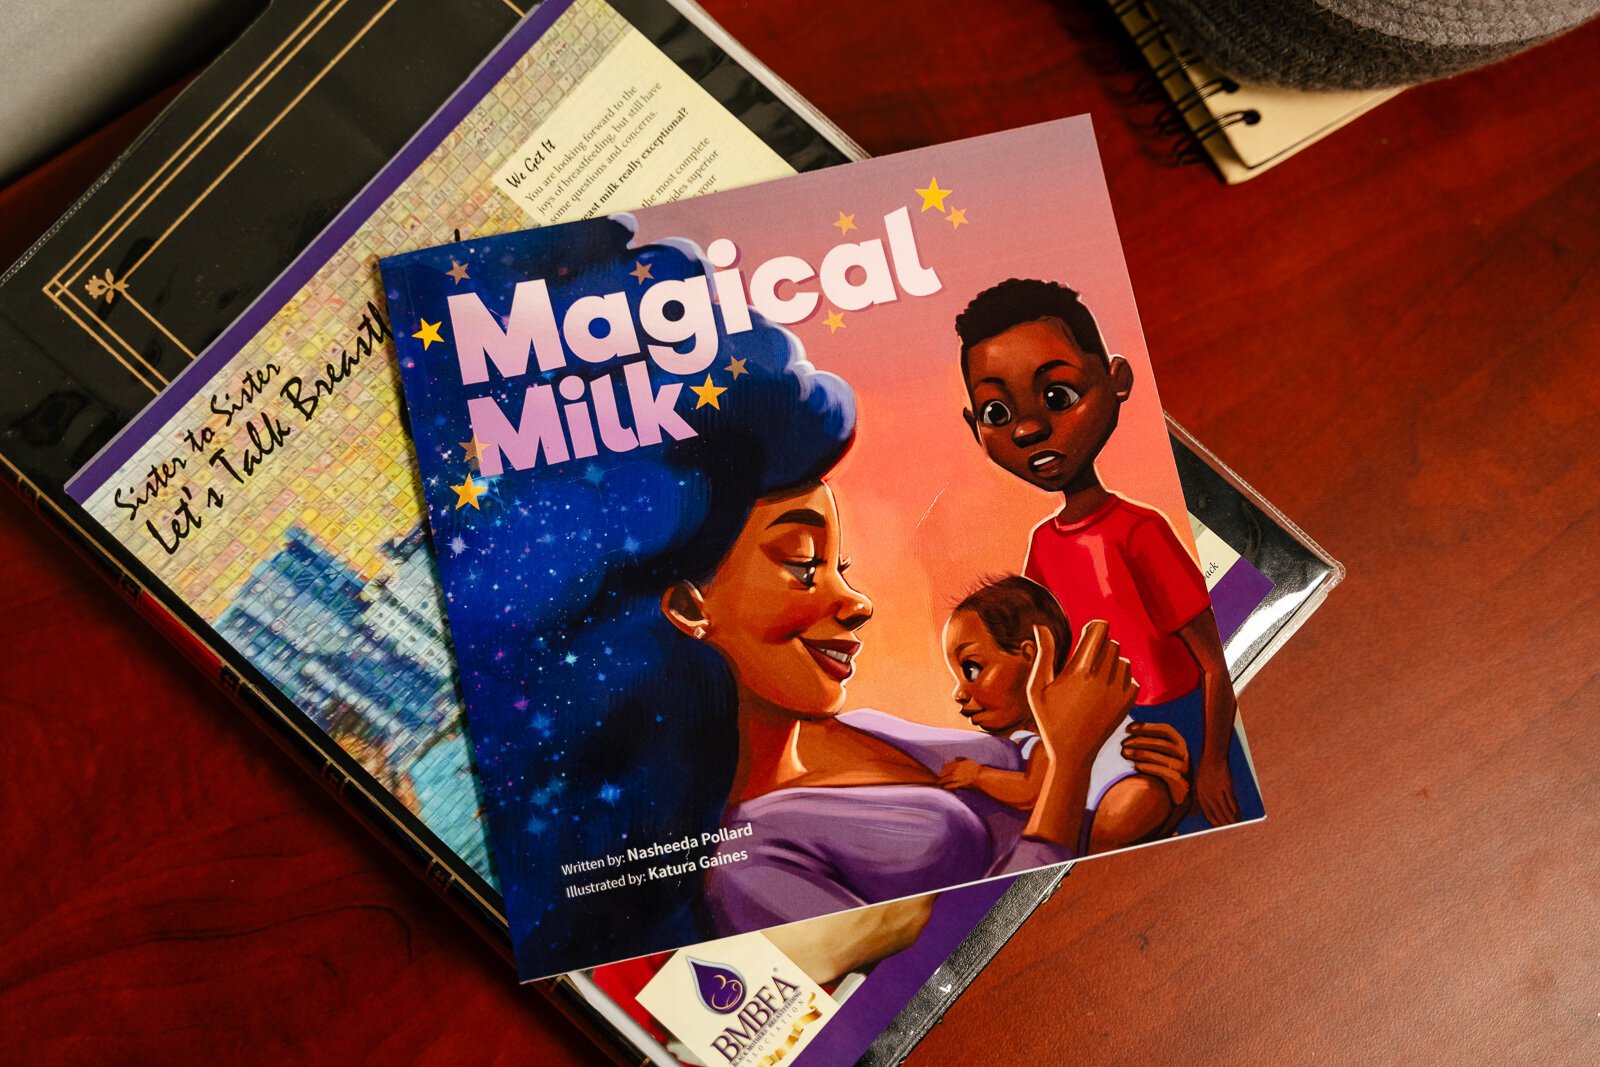 Breastfeeding education materials at the Black Mothers' Breastfeeding Association in Detroit.